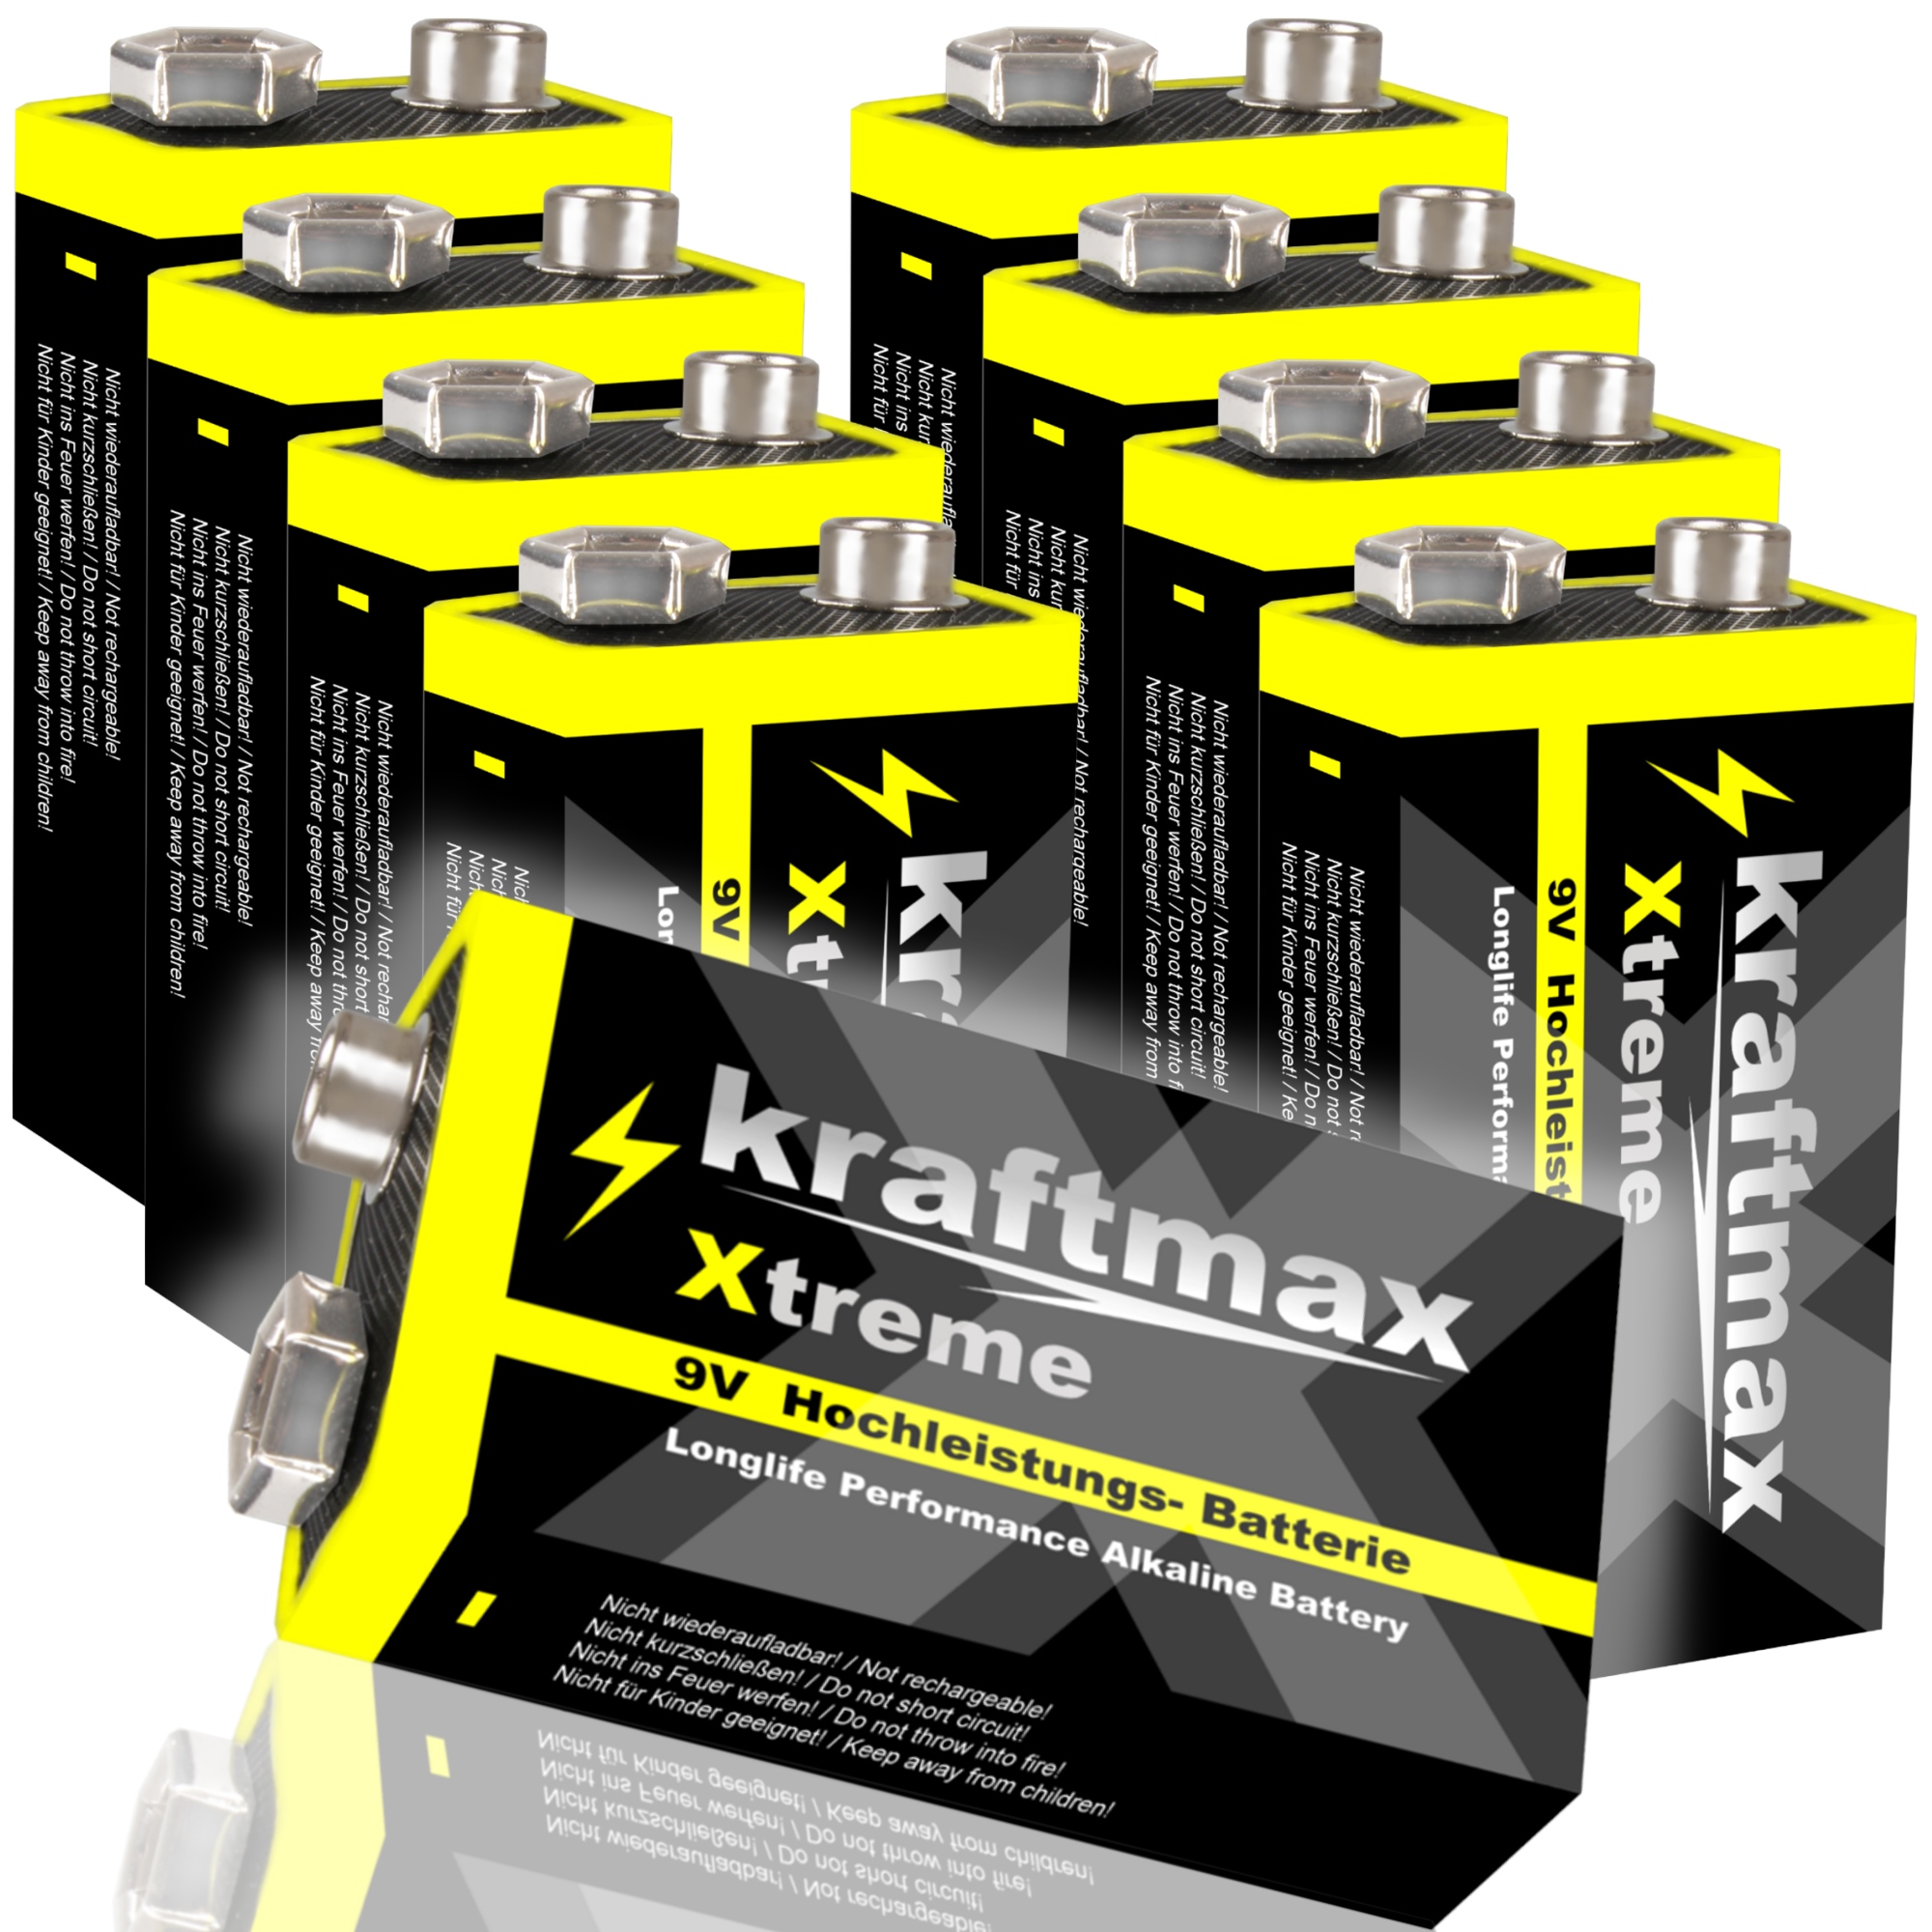 Kraftmax 8er Pack Xtreme 9V Block Hochleistungs- Batterien ideal